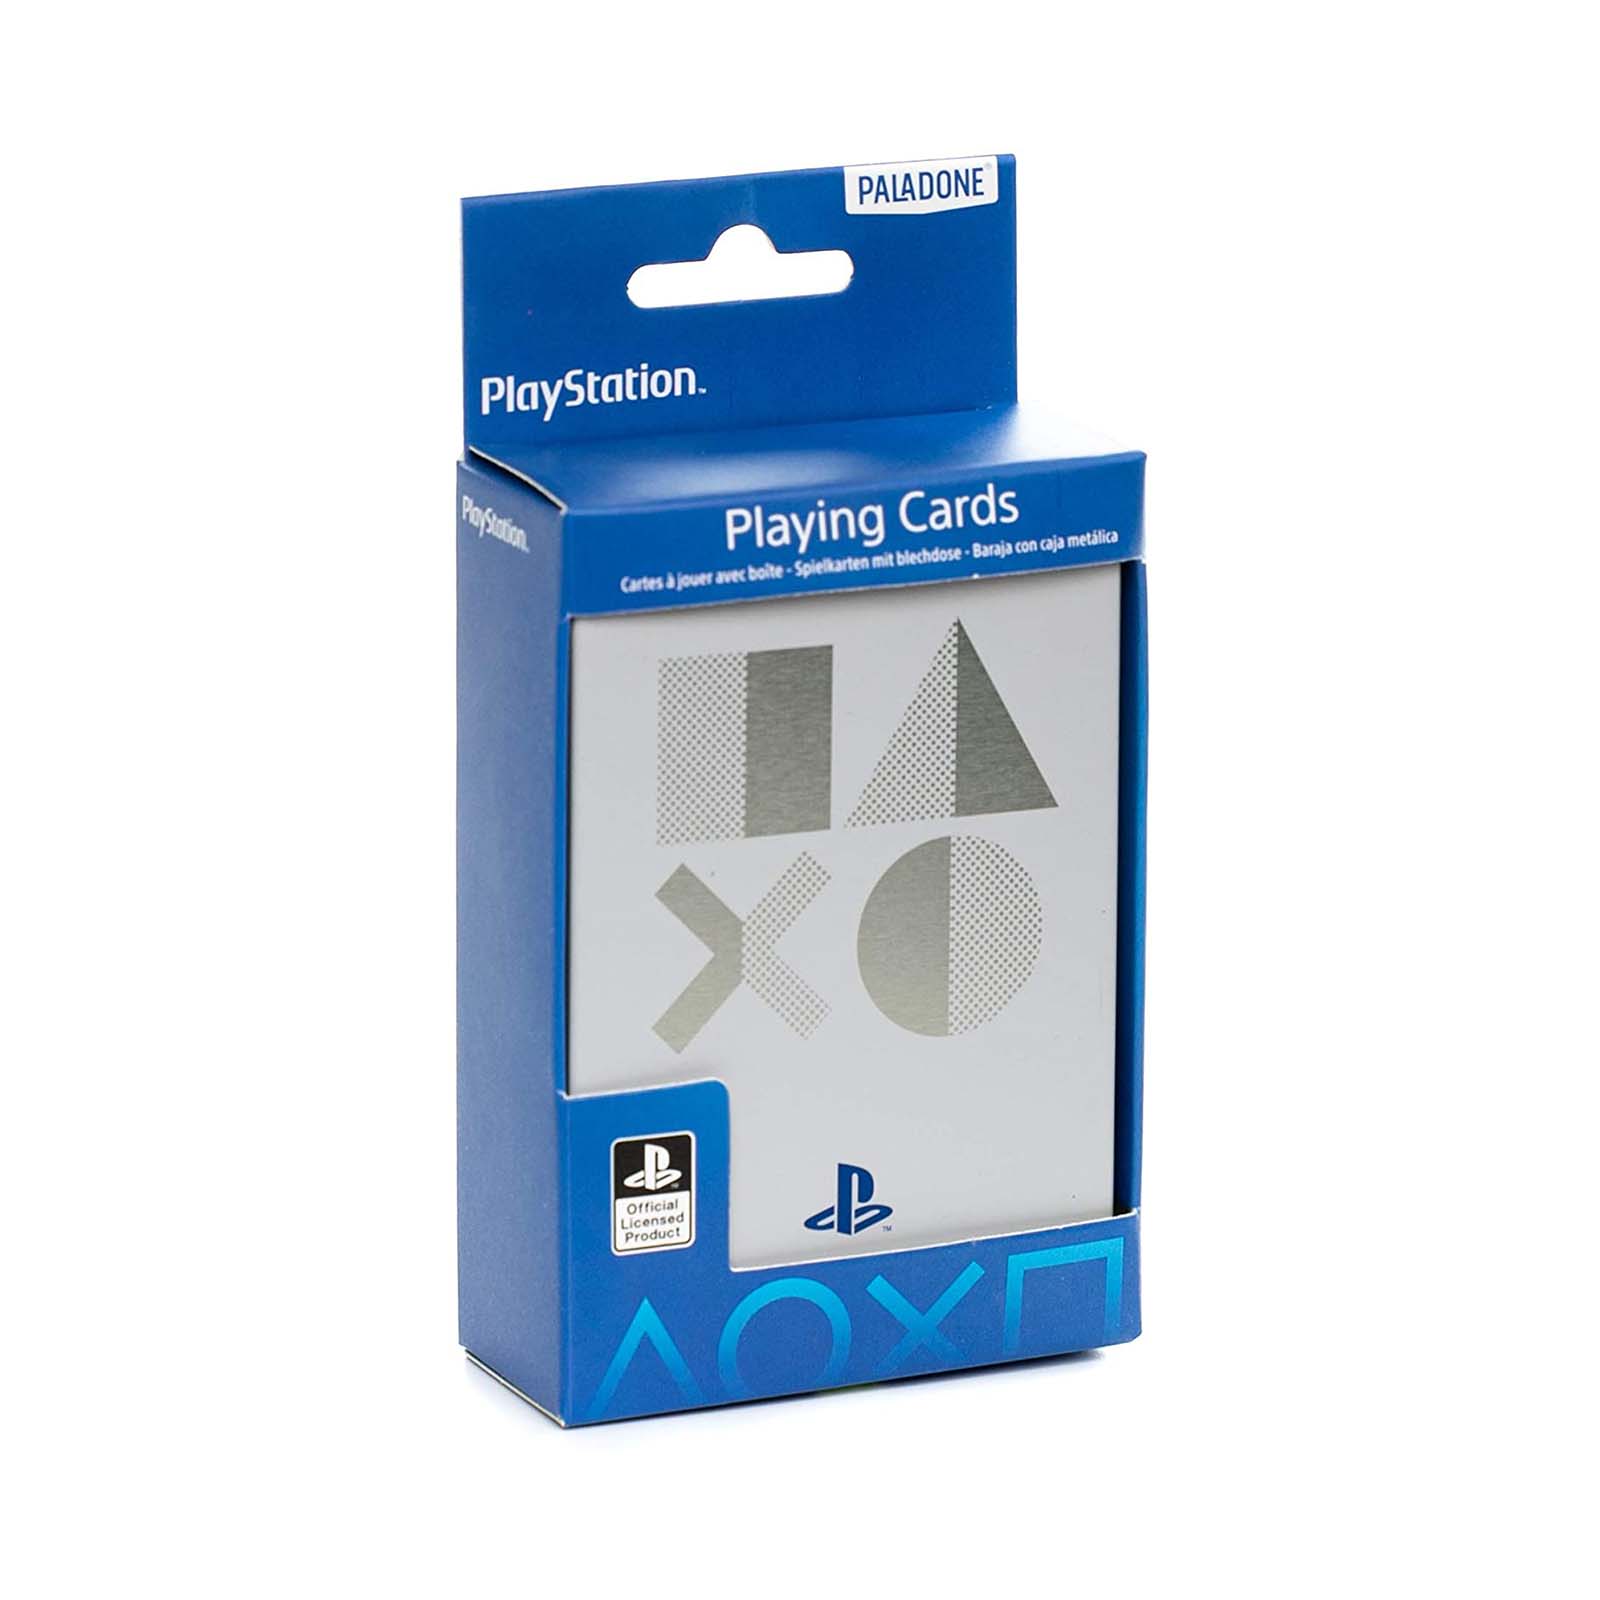 Paladone Playstation PS5 Playing Cards